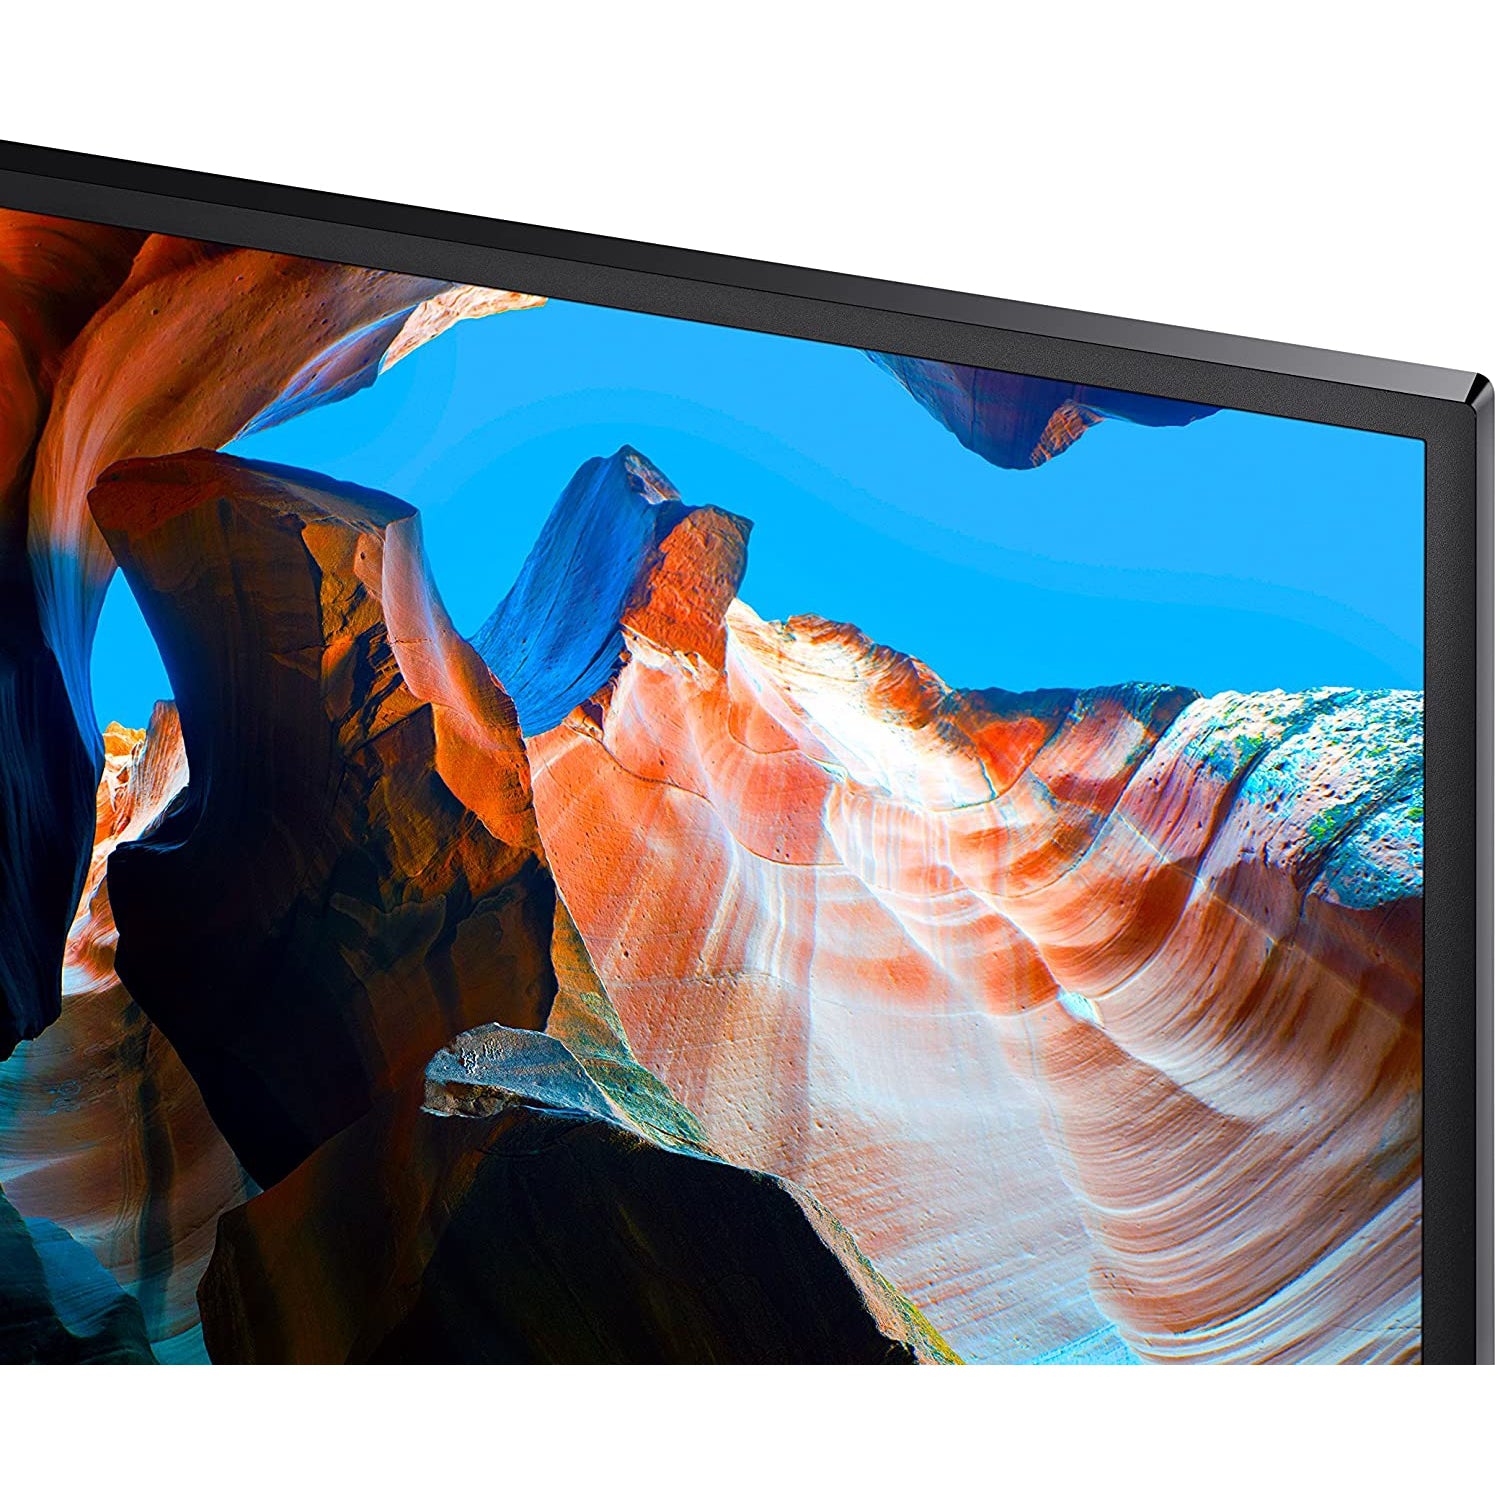 Samsung J590 32'' 4K UHD Monitor, Black (U32J590UQR) - Refurbished Good